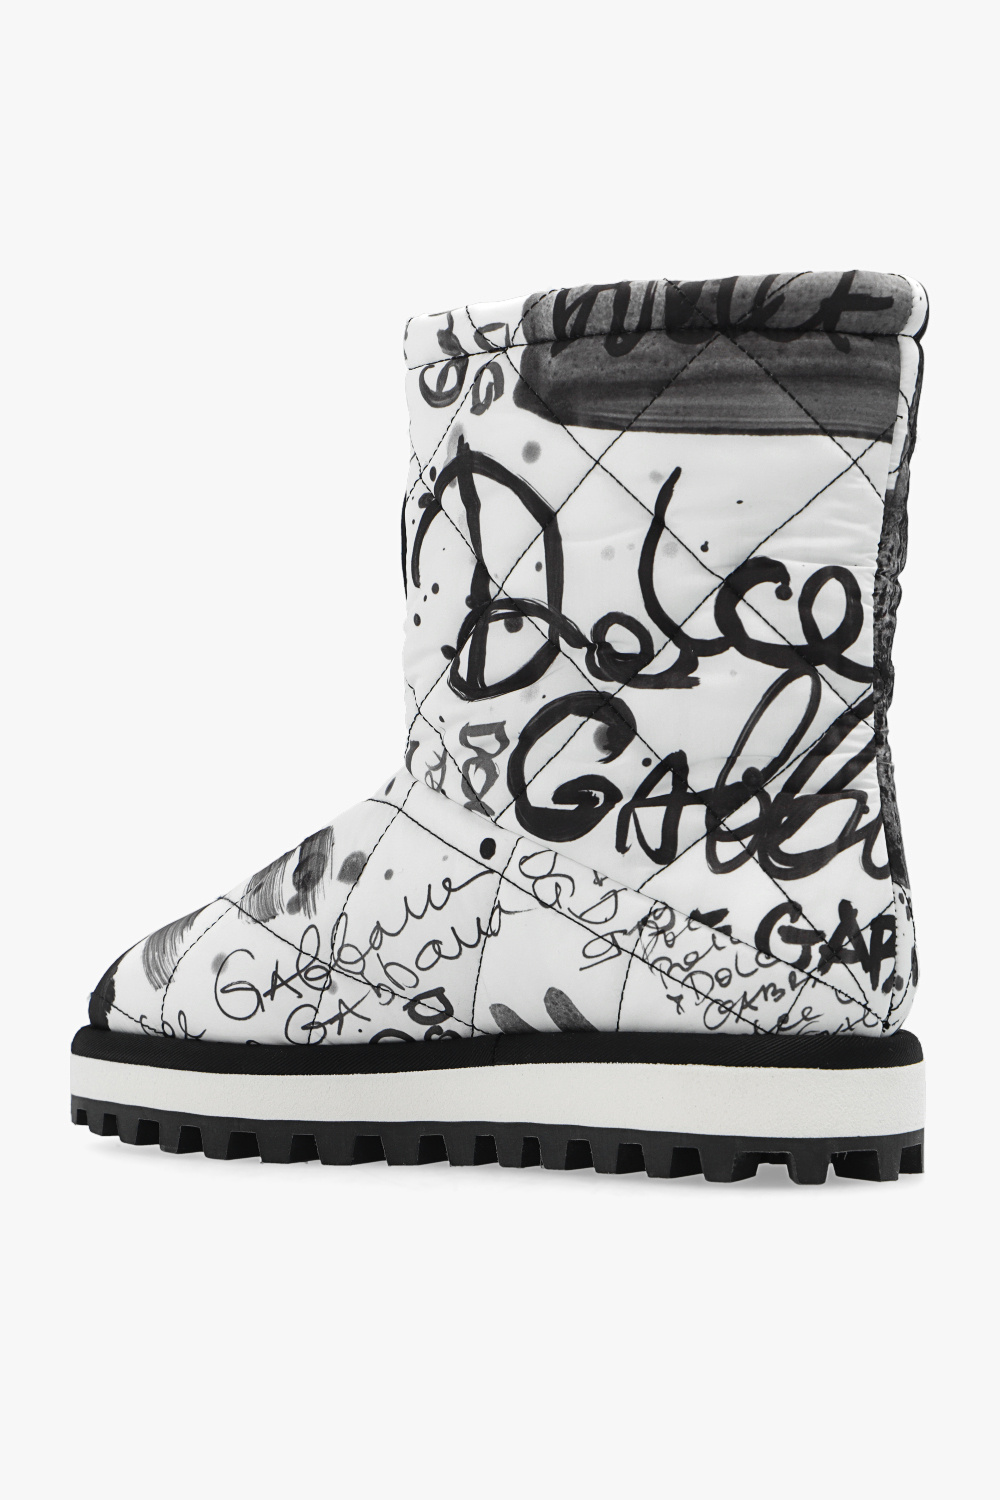 dolce WALLET & Gabbana pumpkin print silk scarf Quilted snow boots